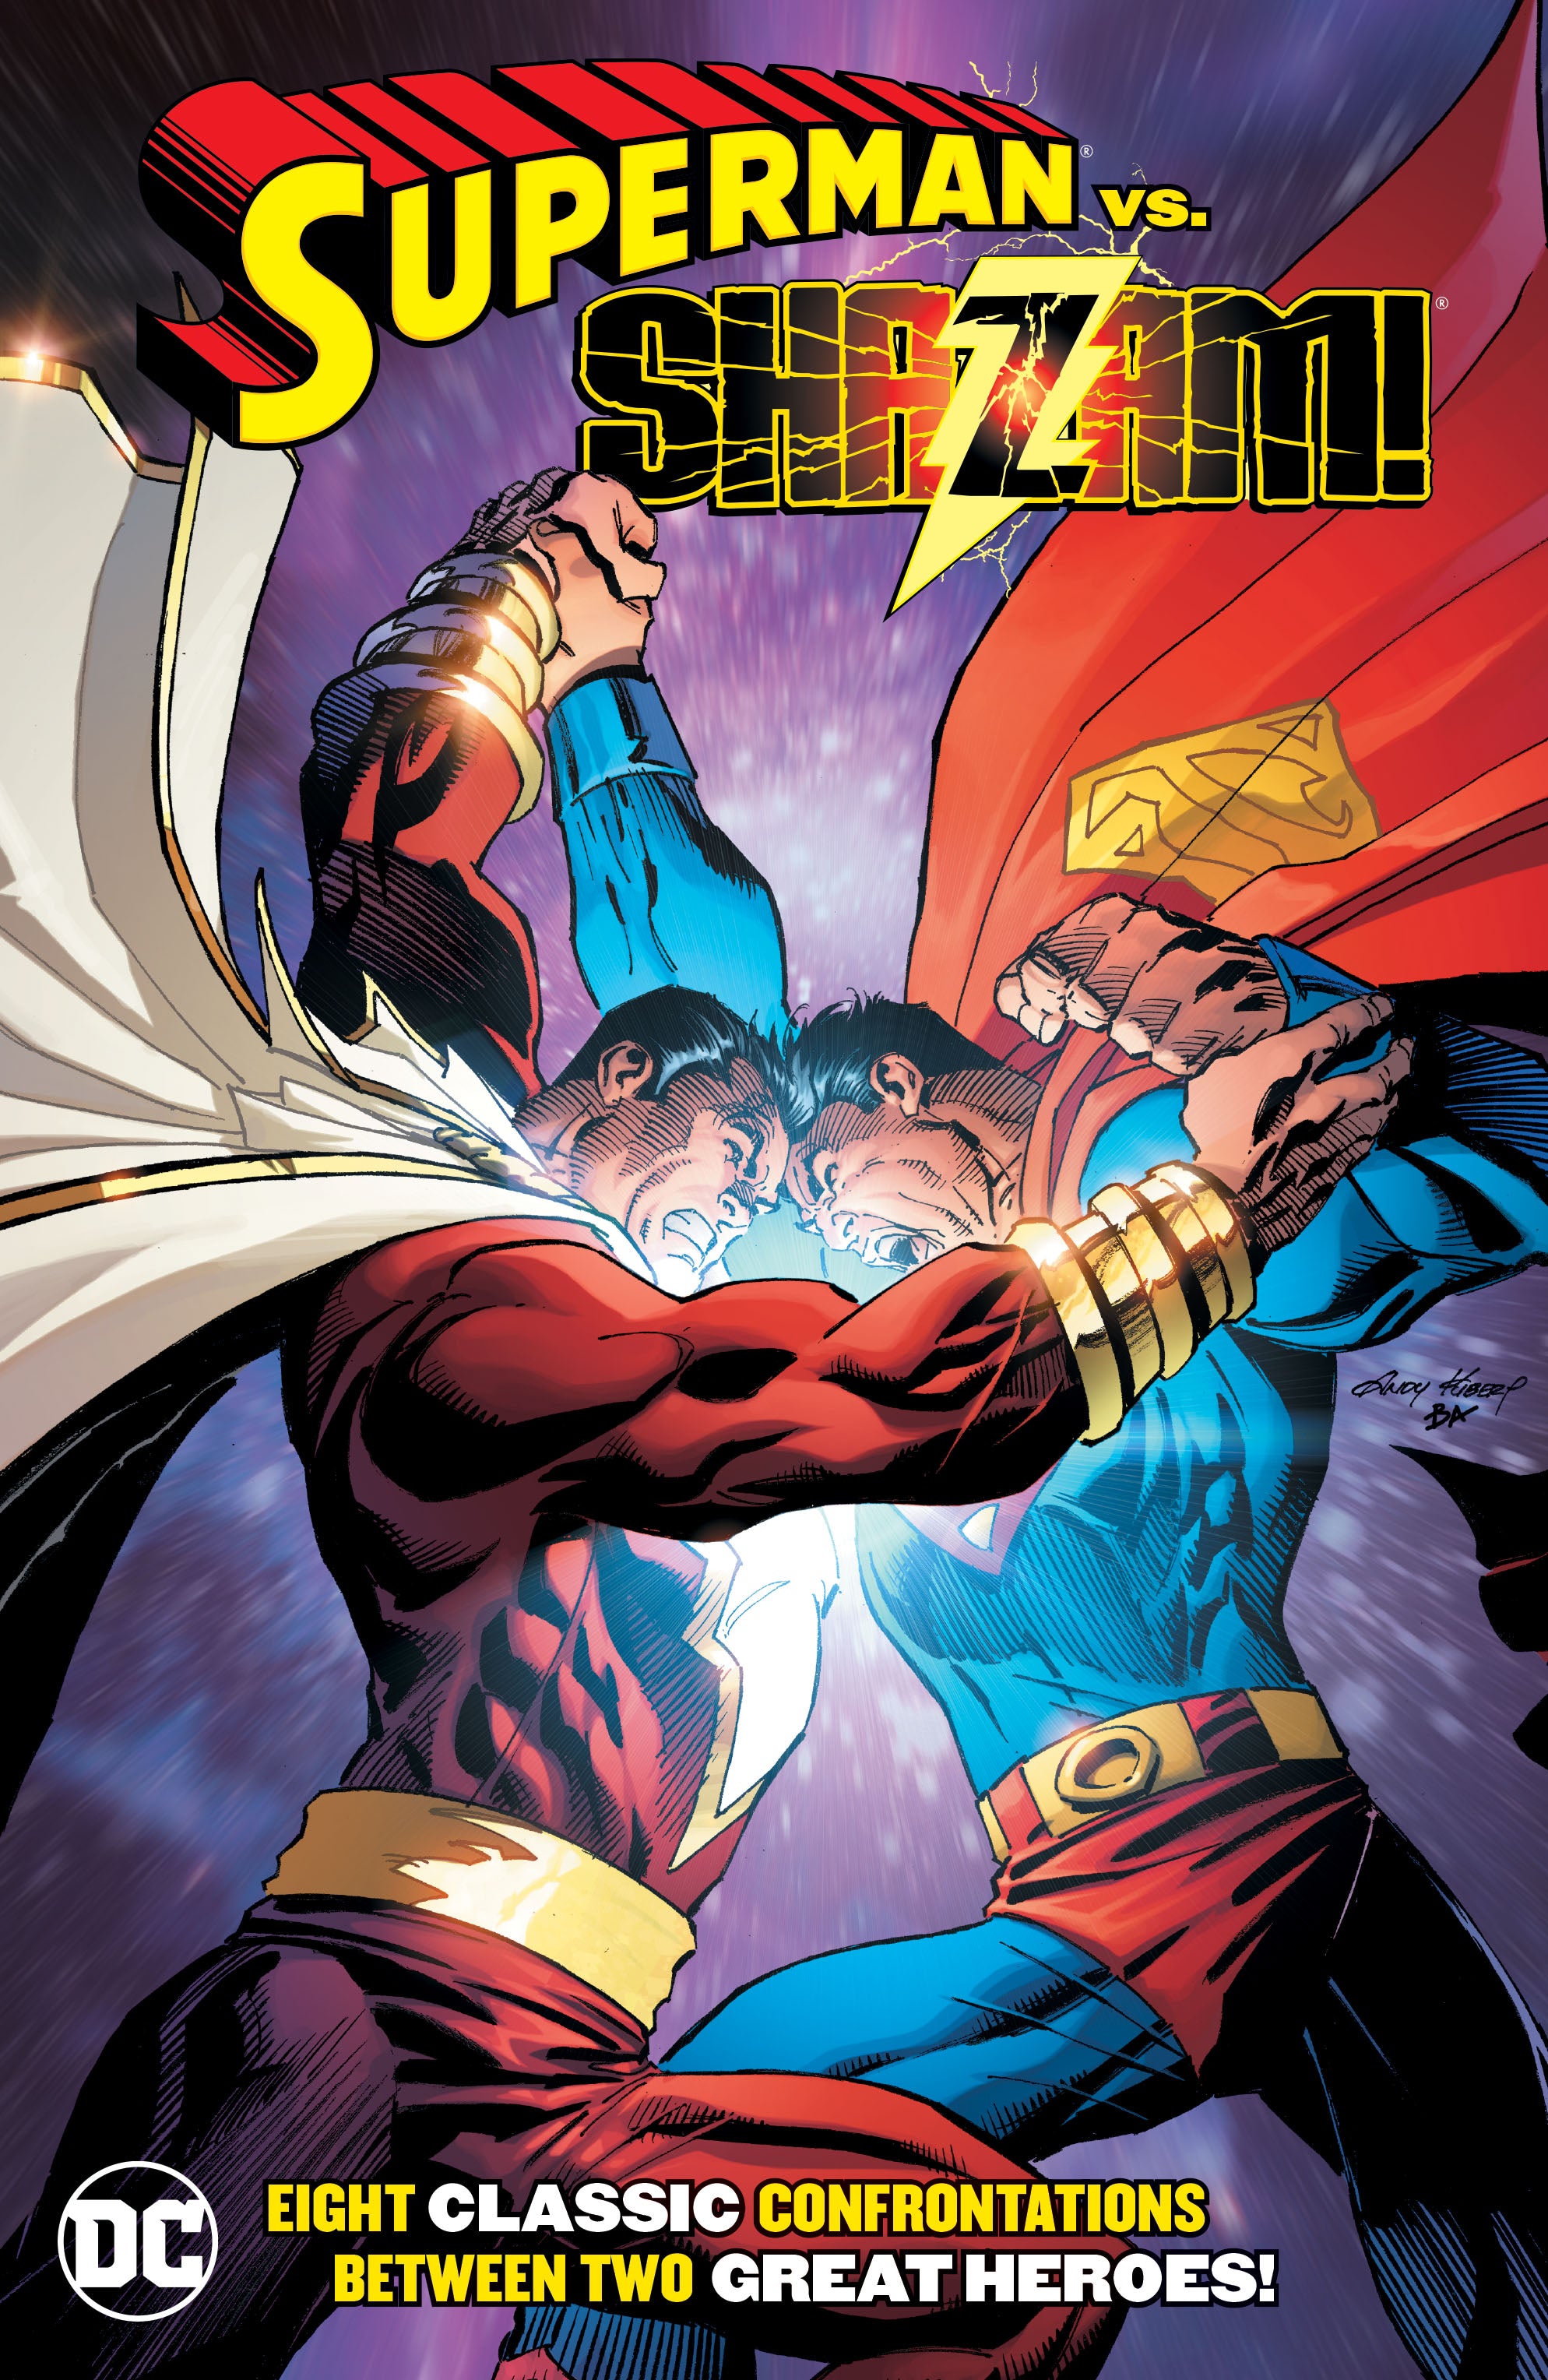 SUPERMAN VS SHAZAM TRADE PAPERBACK